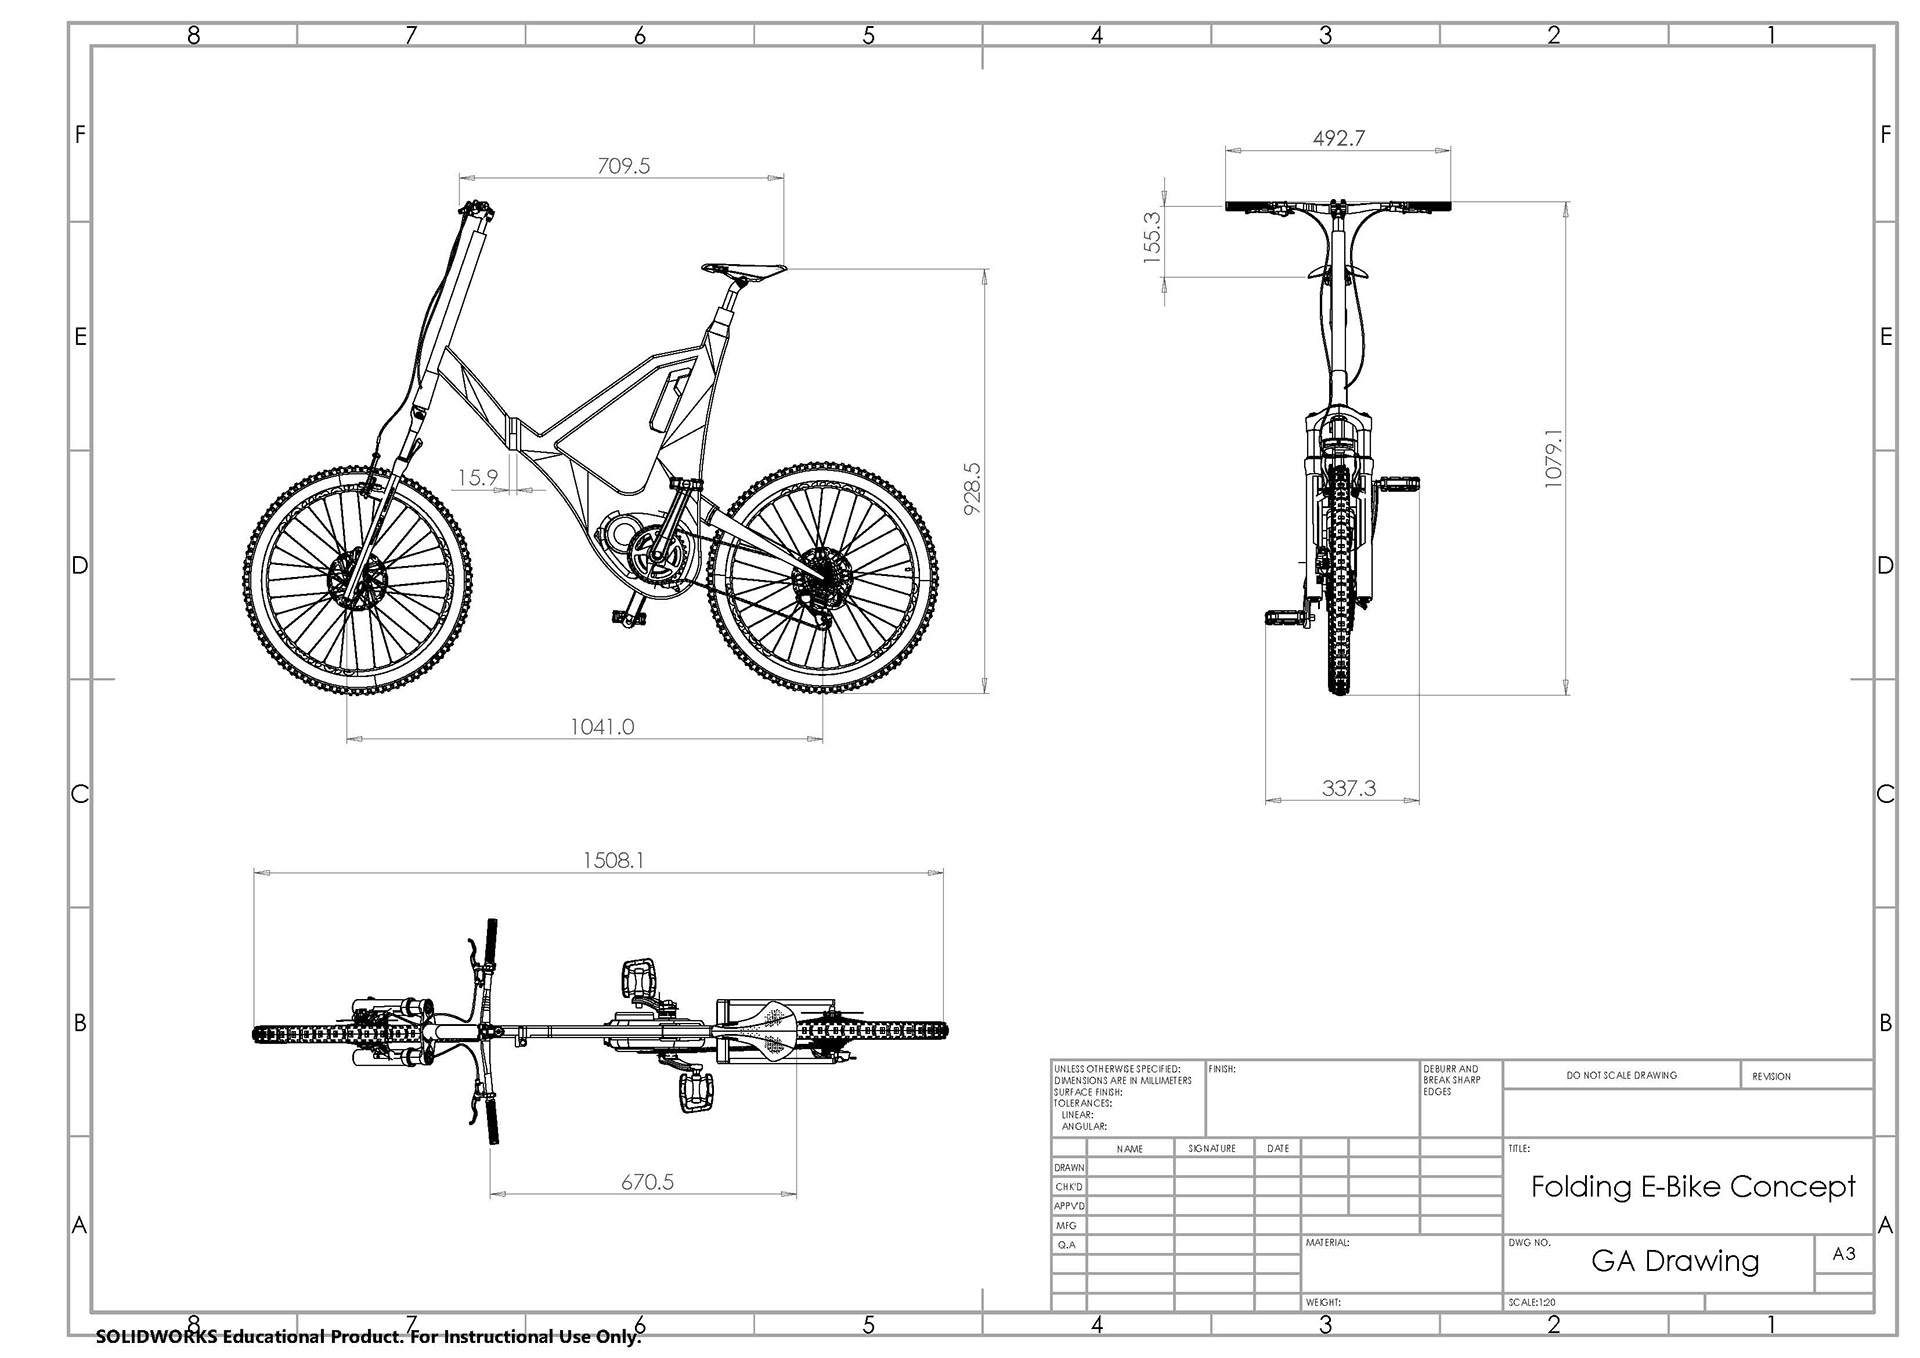 emilyjadedesign - Folding Electric Bike Concept